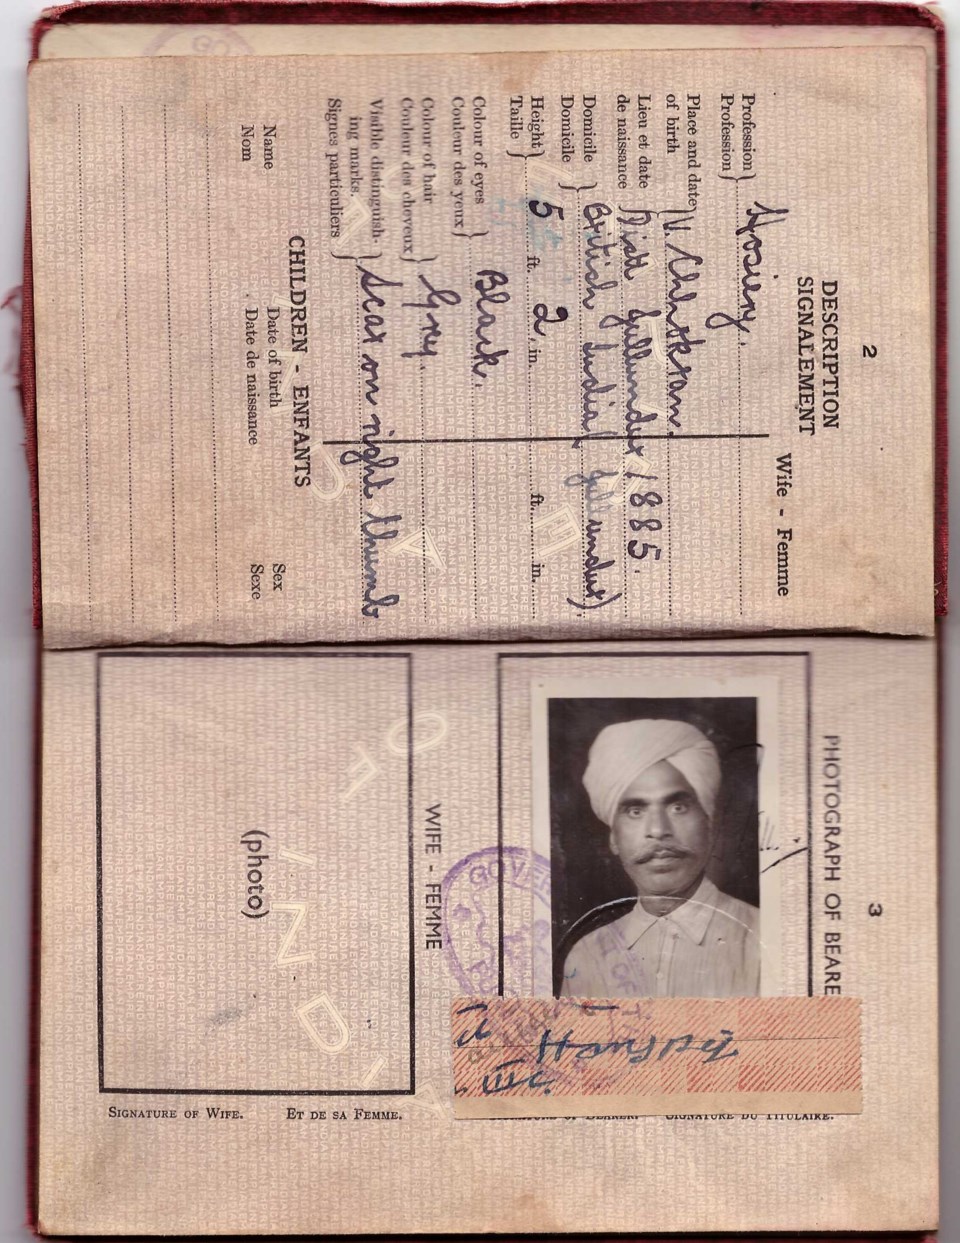 grandfather-passport-1